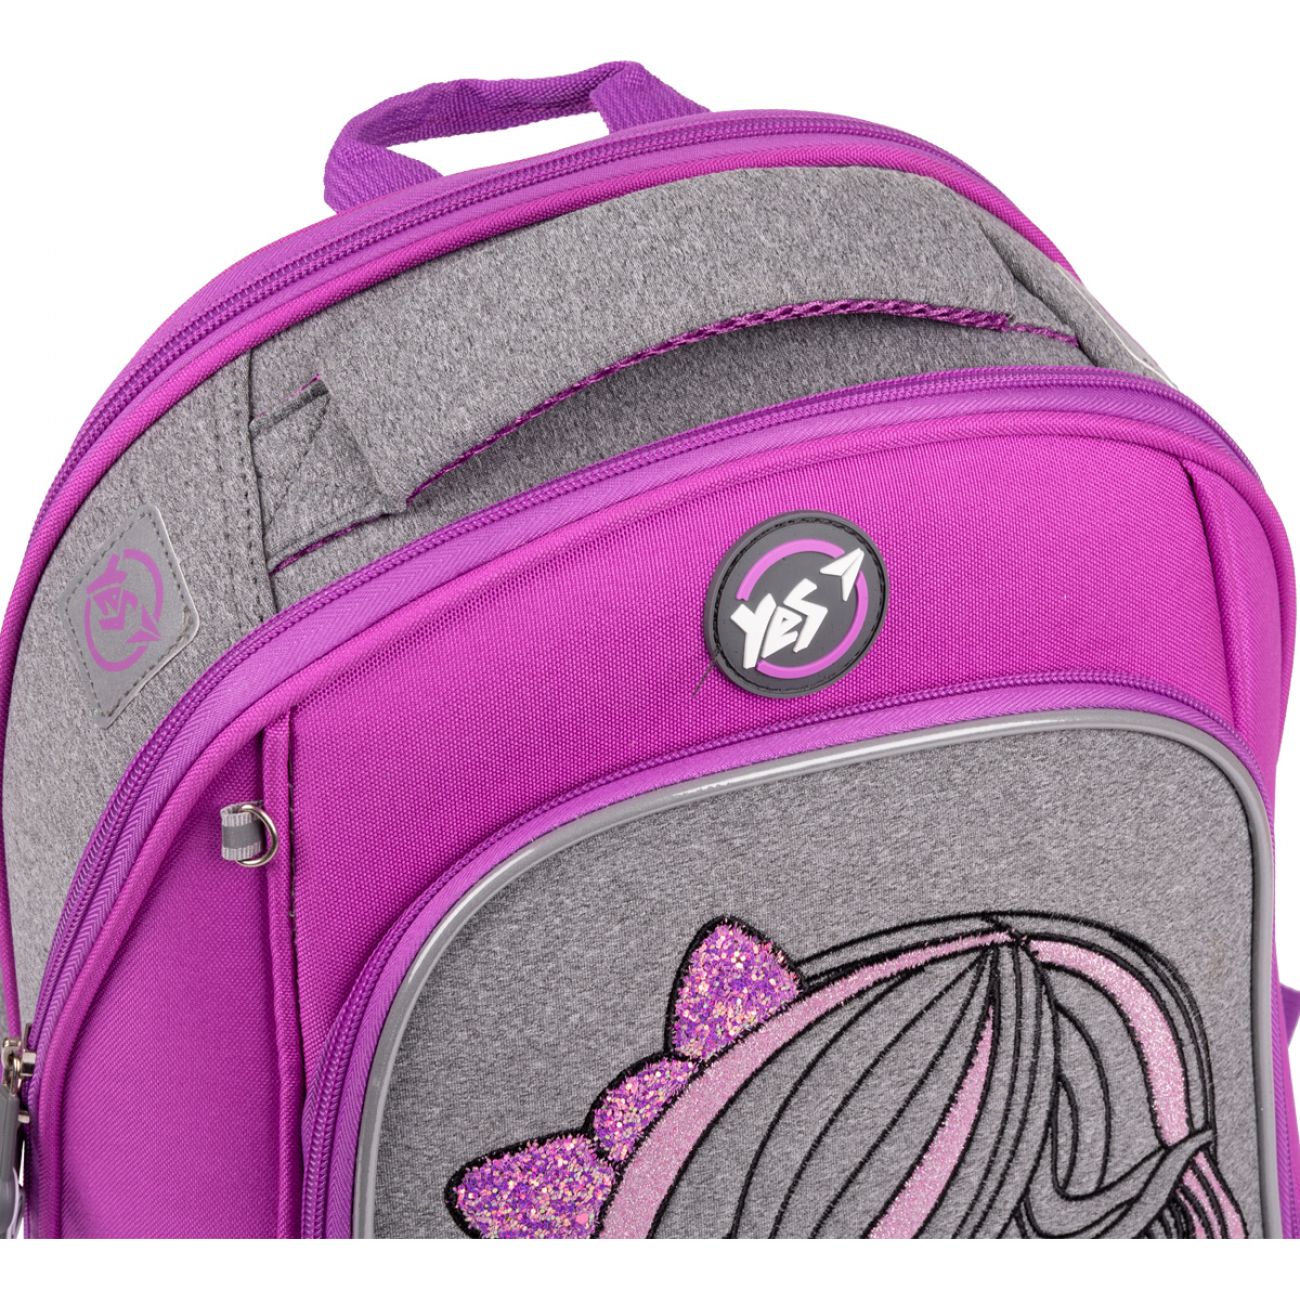 Каркасный рюкзак Yes S-89 Mini girl (559102) - фото 10